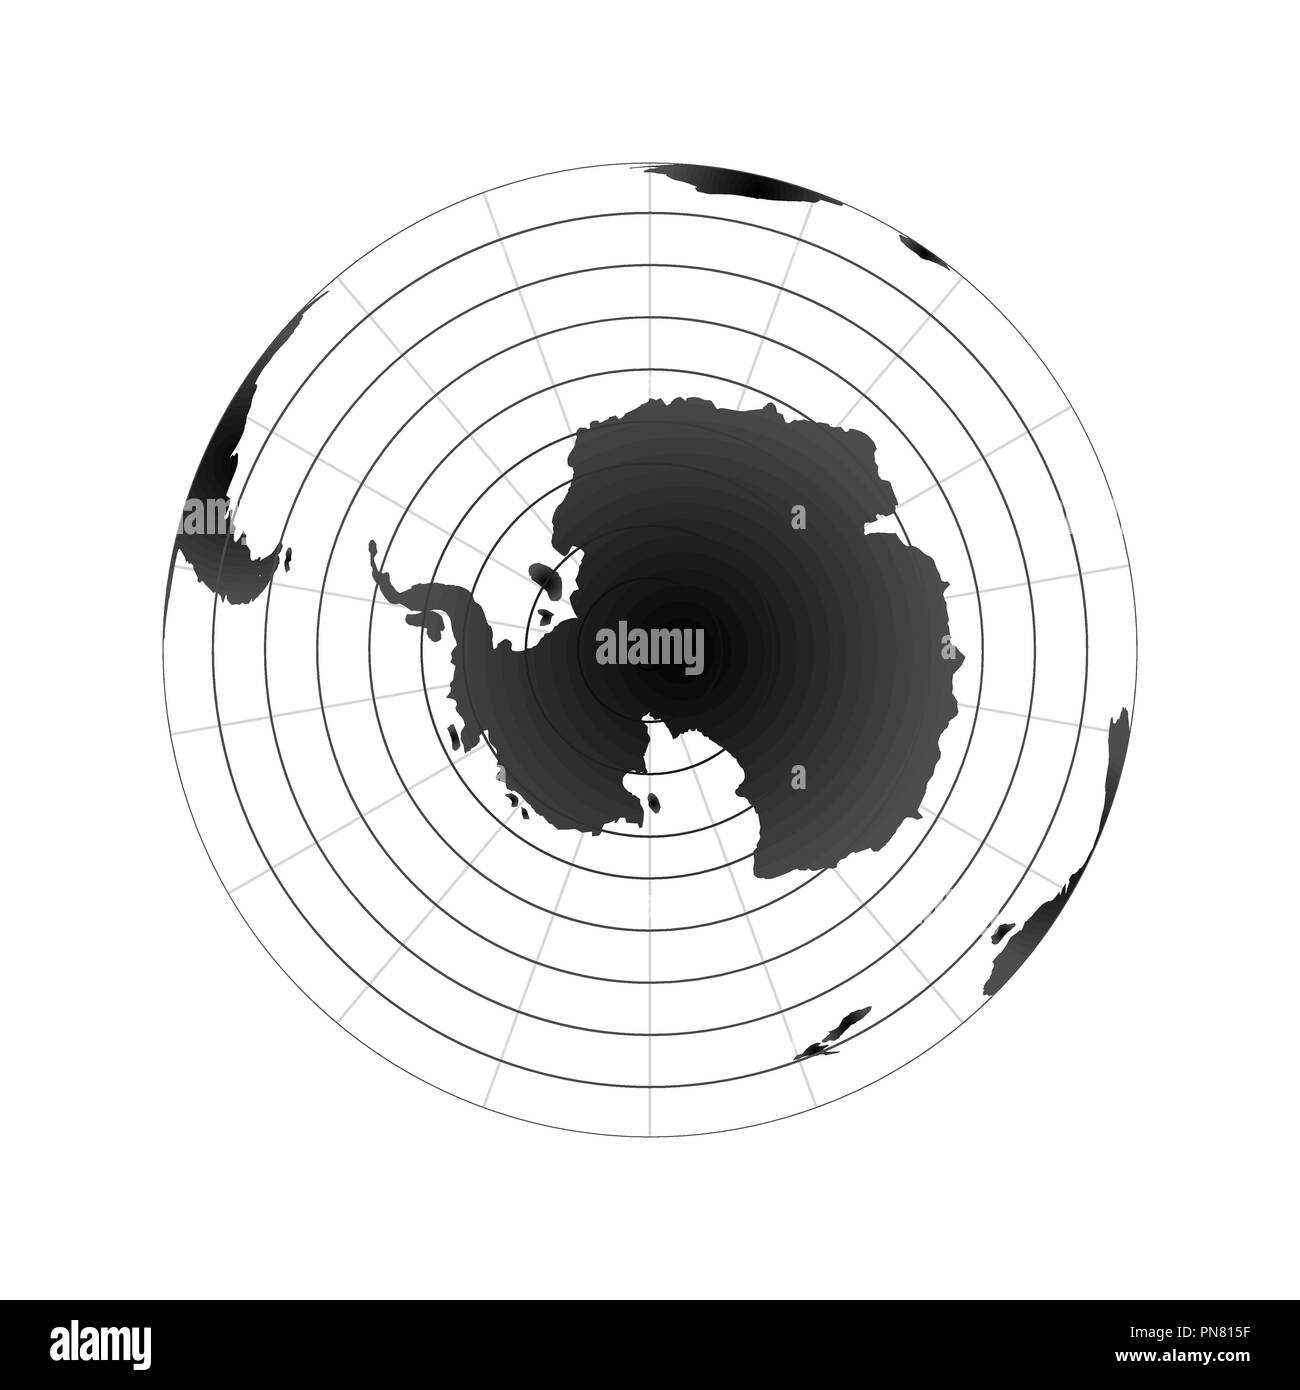 Antarktis Nordpol Globus Hemisphäre. Welt Karte Blick aus dem Weltall auf Weiß Stock Vektor